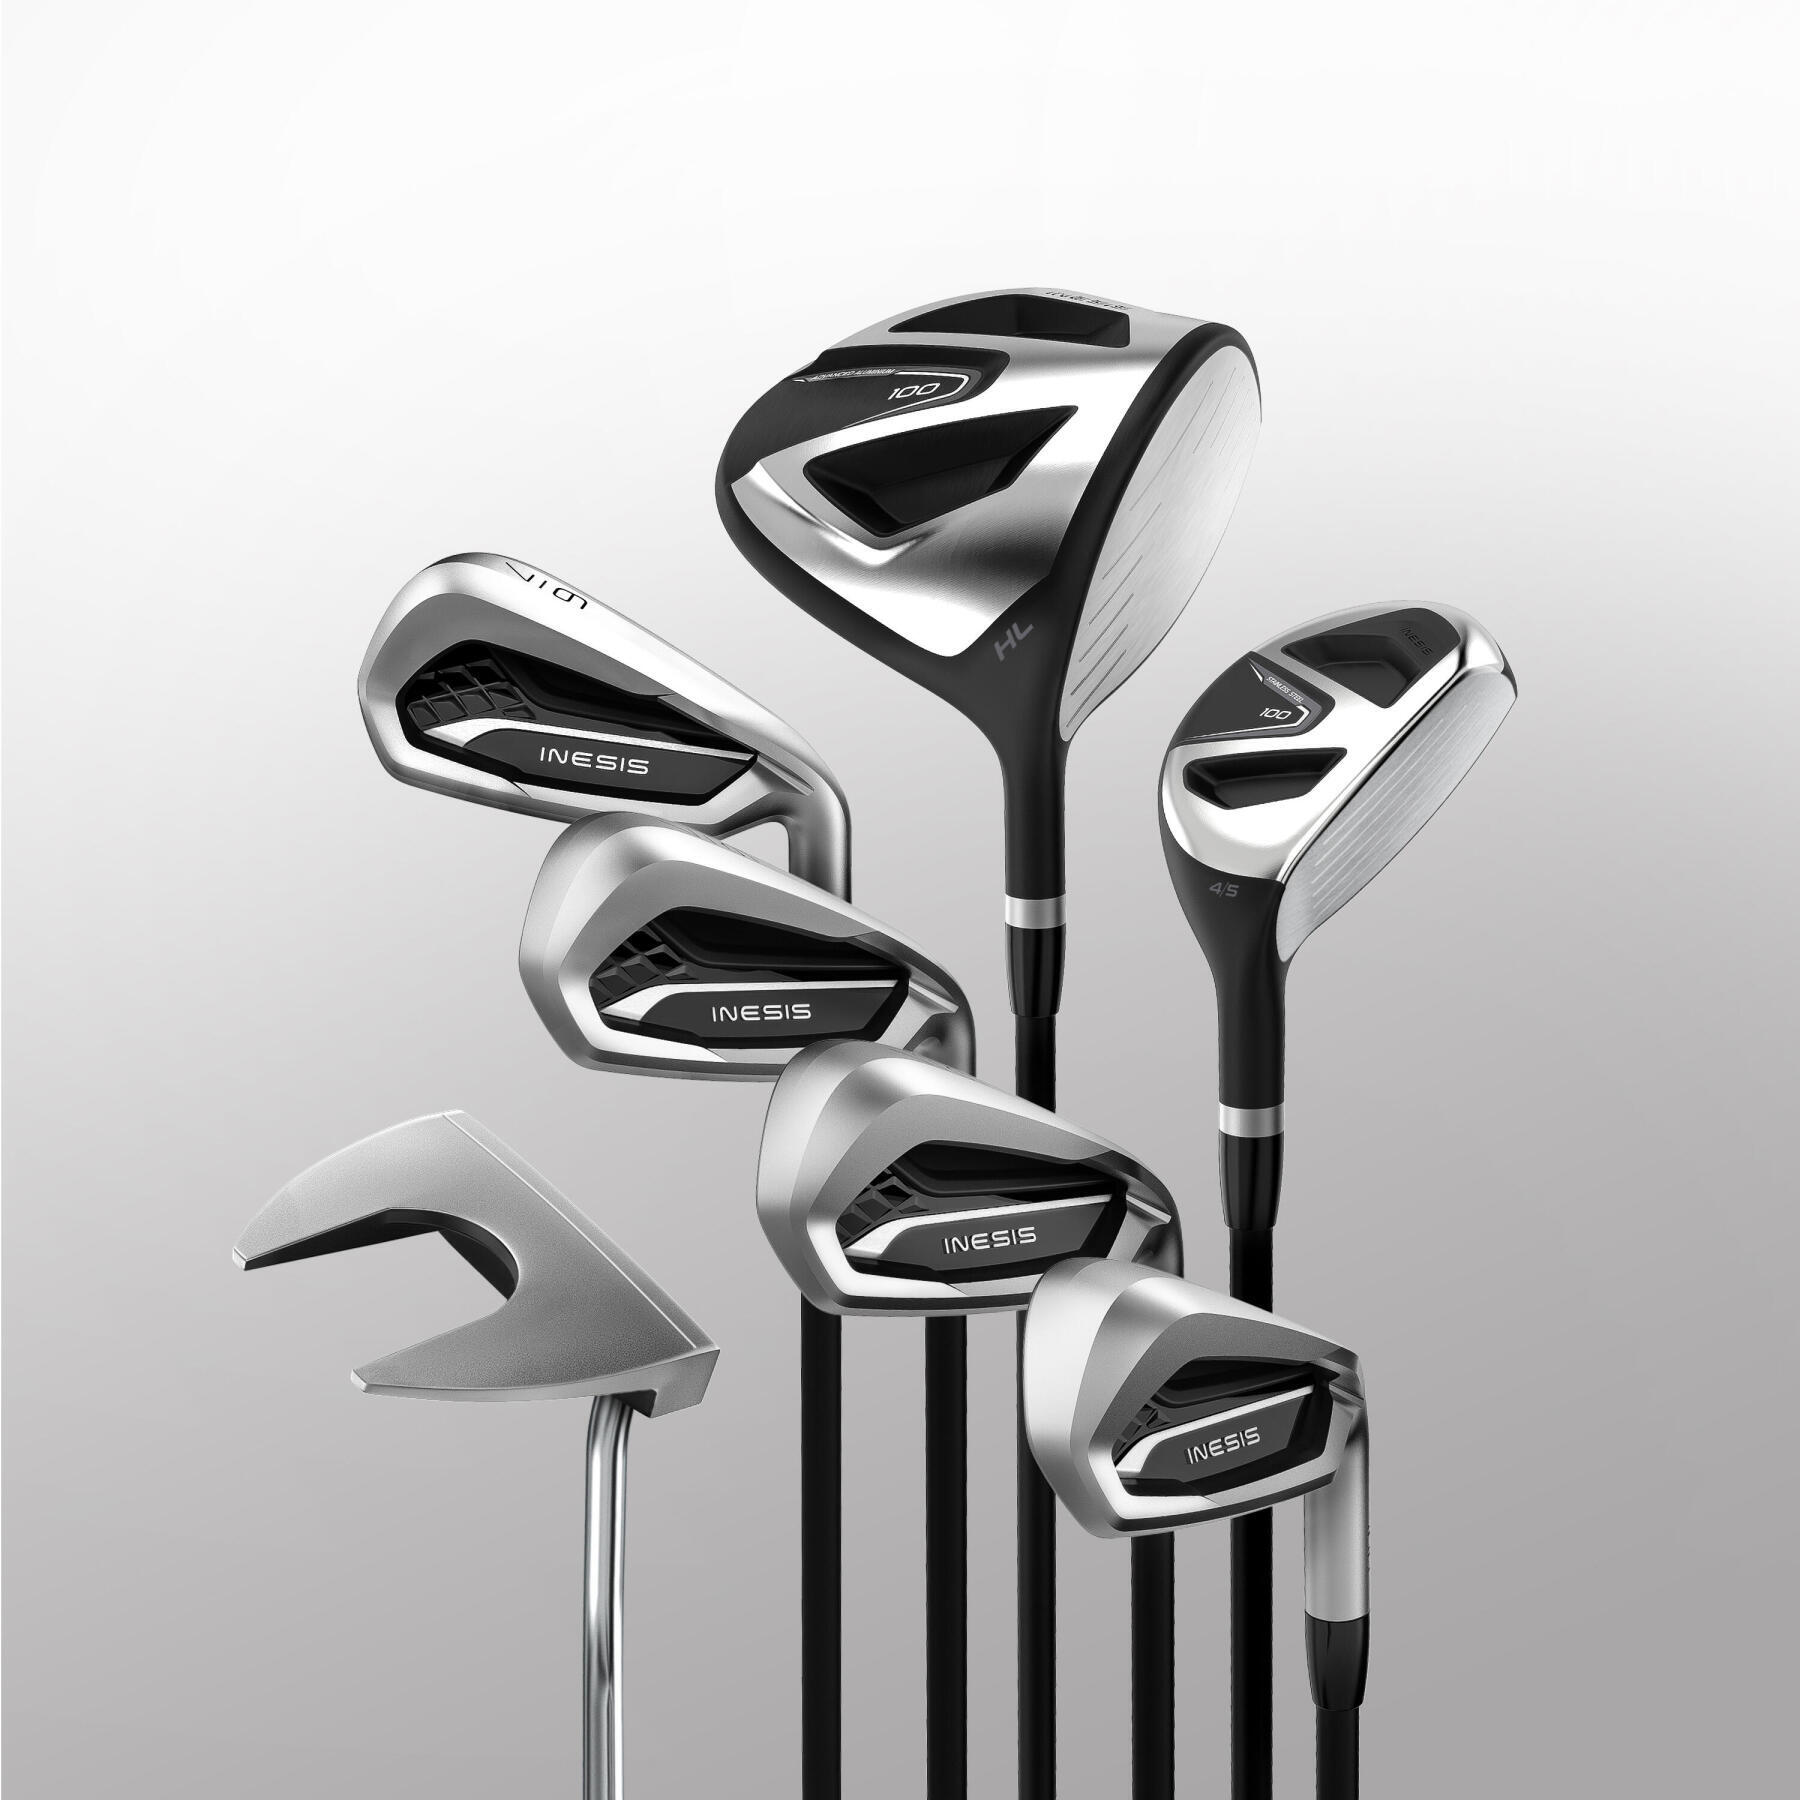 A set of golf clubs for beginner